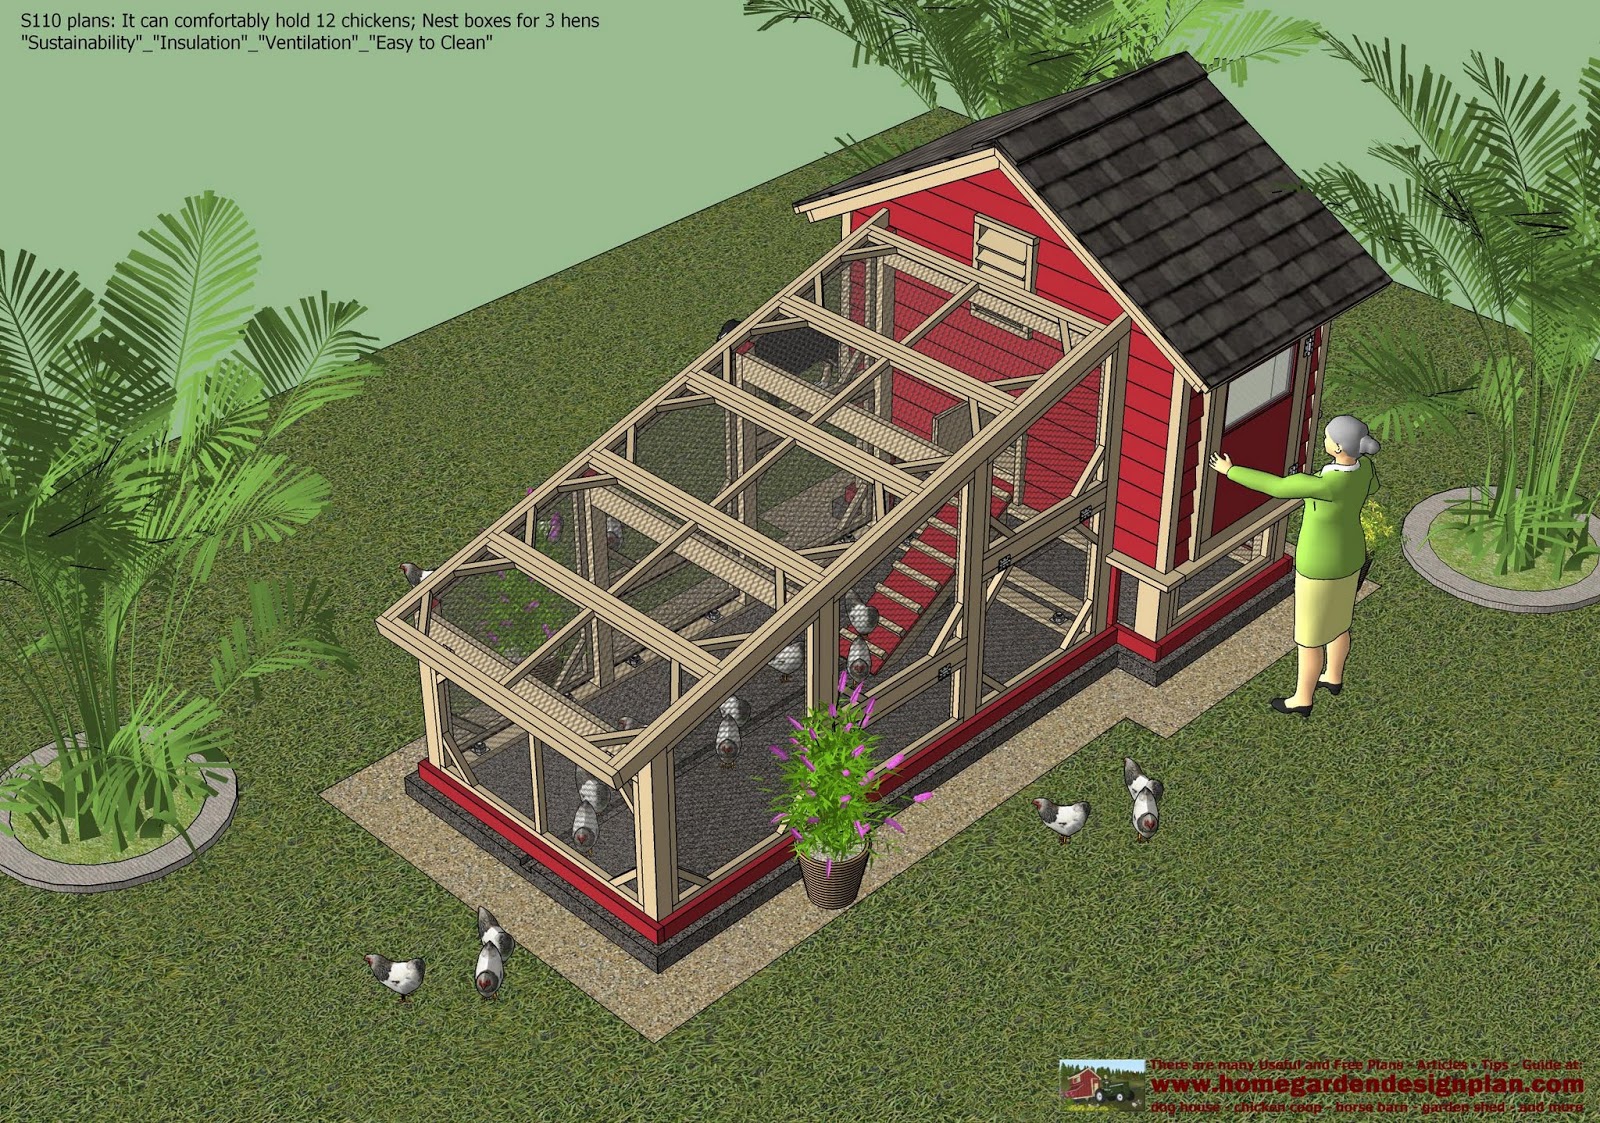 S110 Chicken Coop Plans Construction Chicken Coop Design How To Build ...